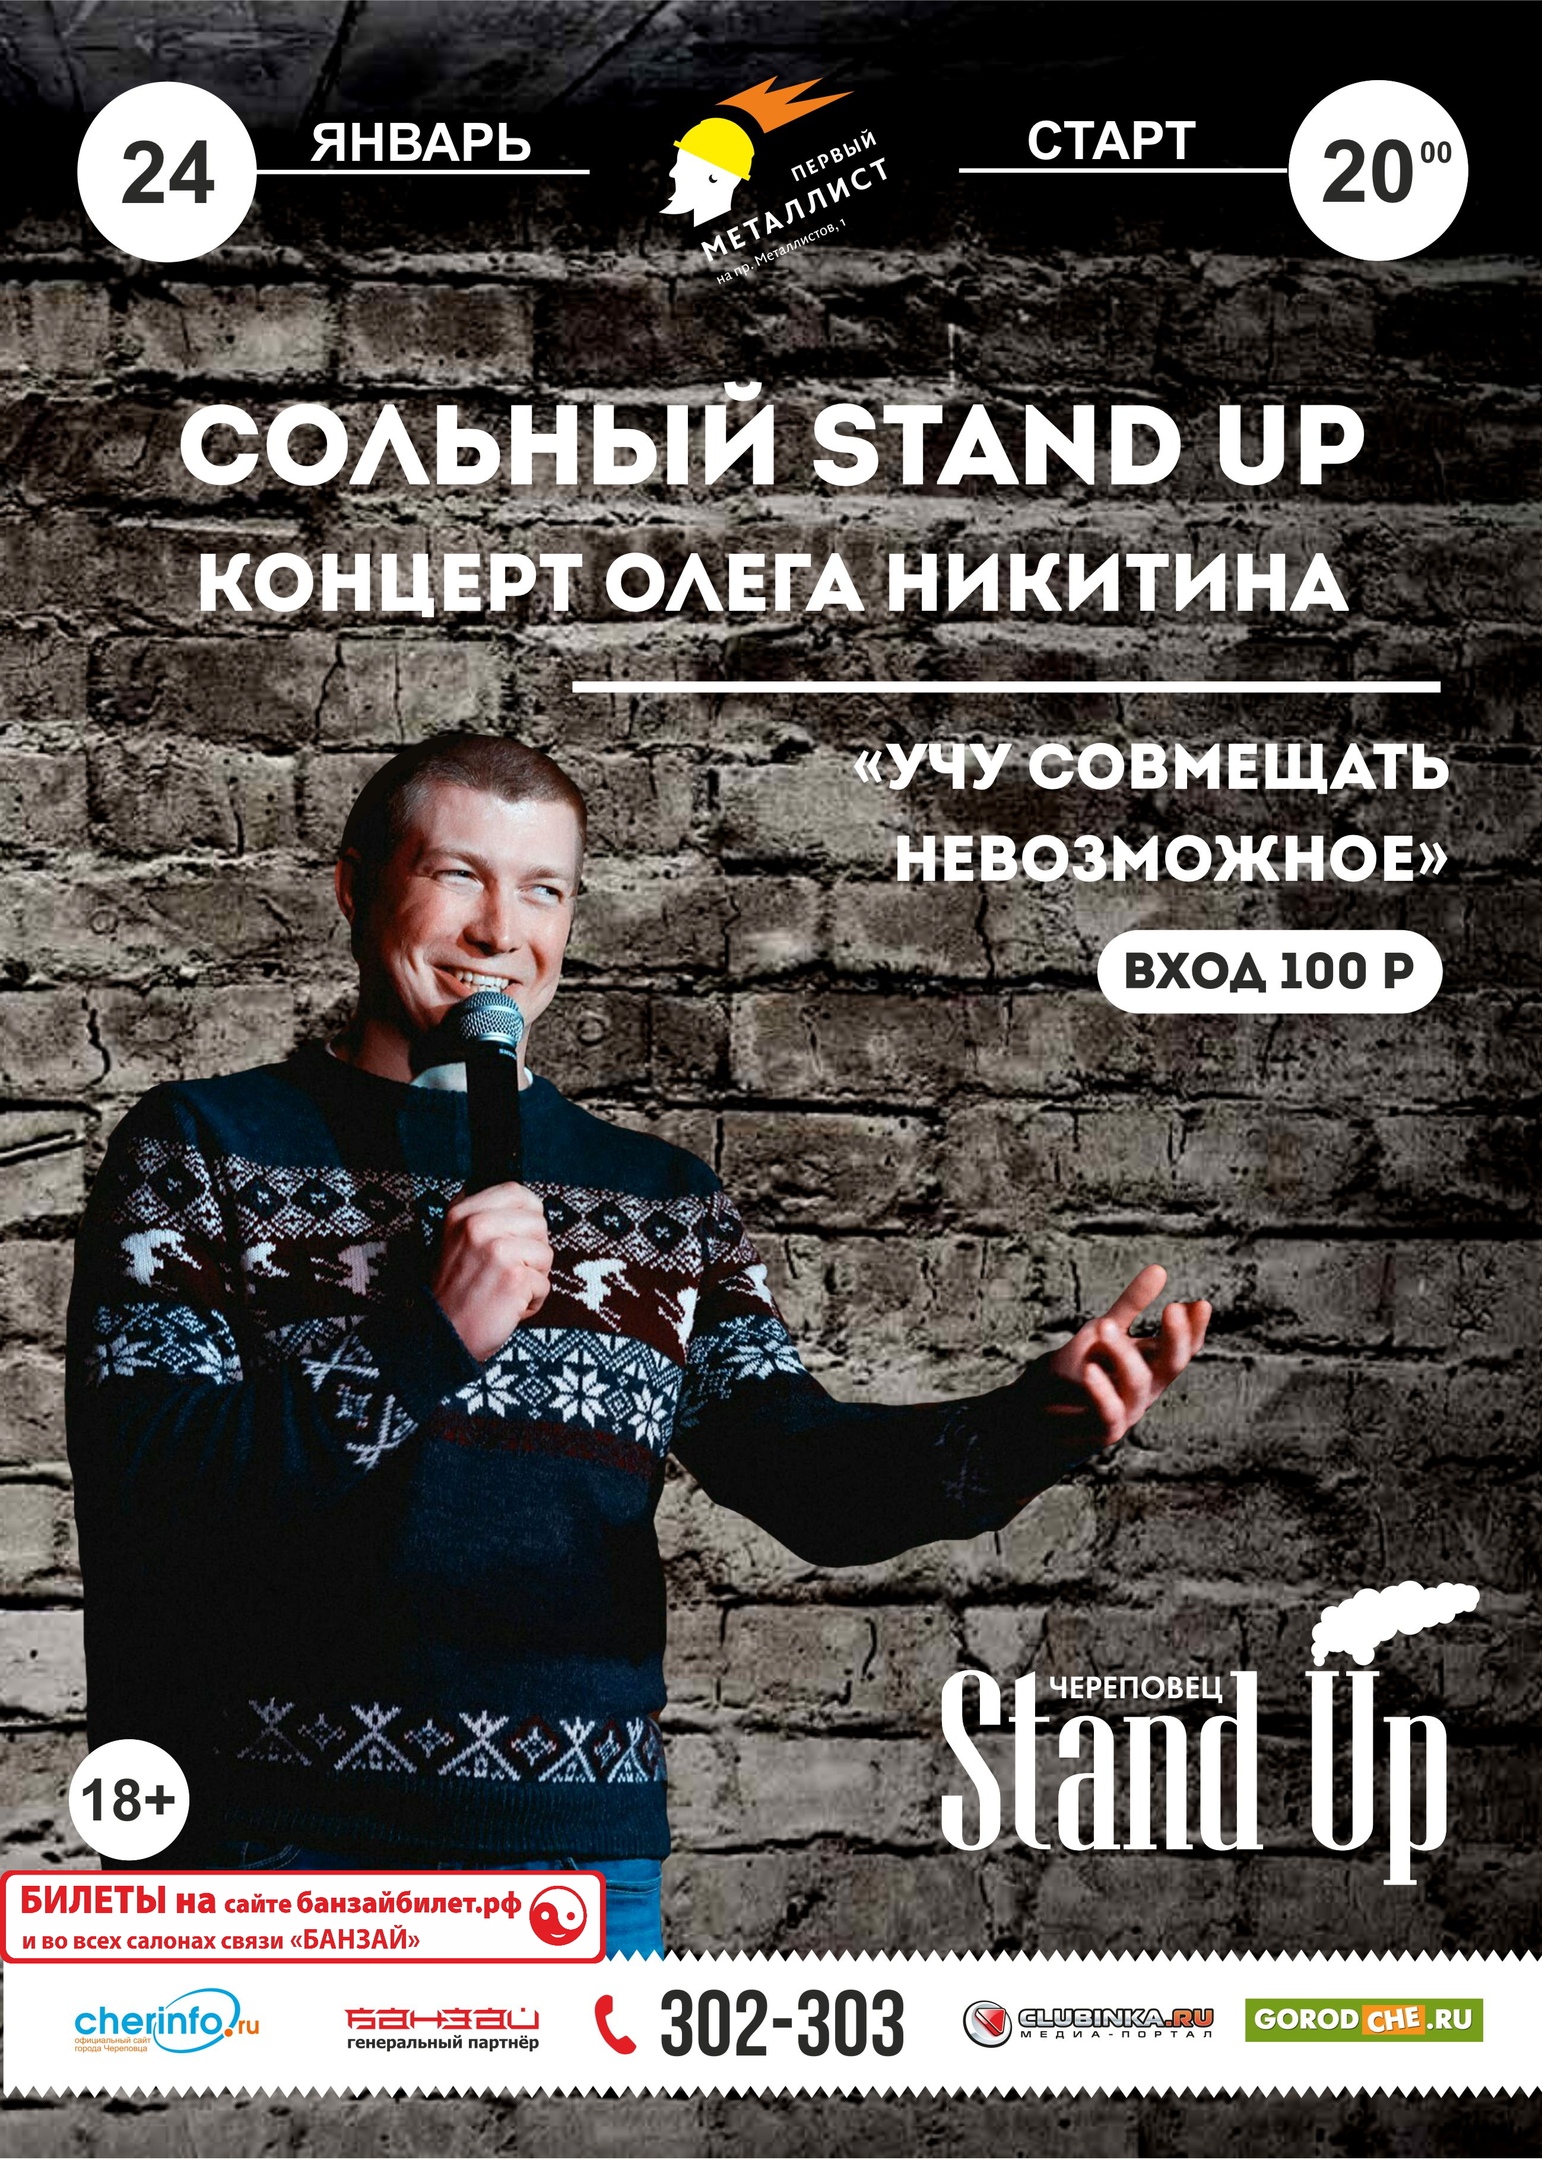 Stand Up: Олег Никитин